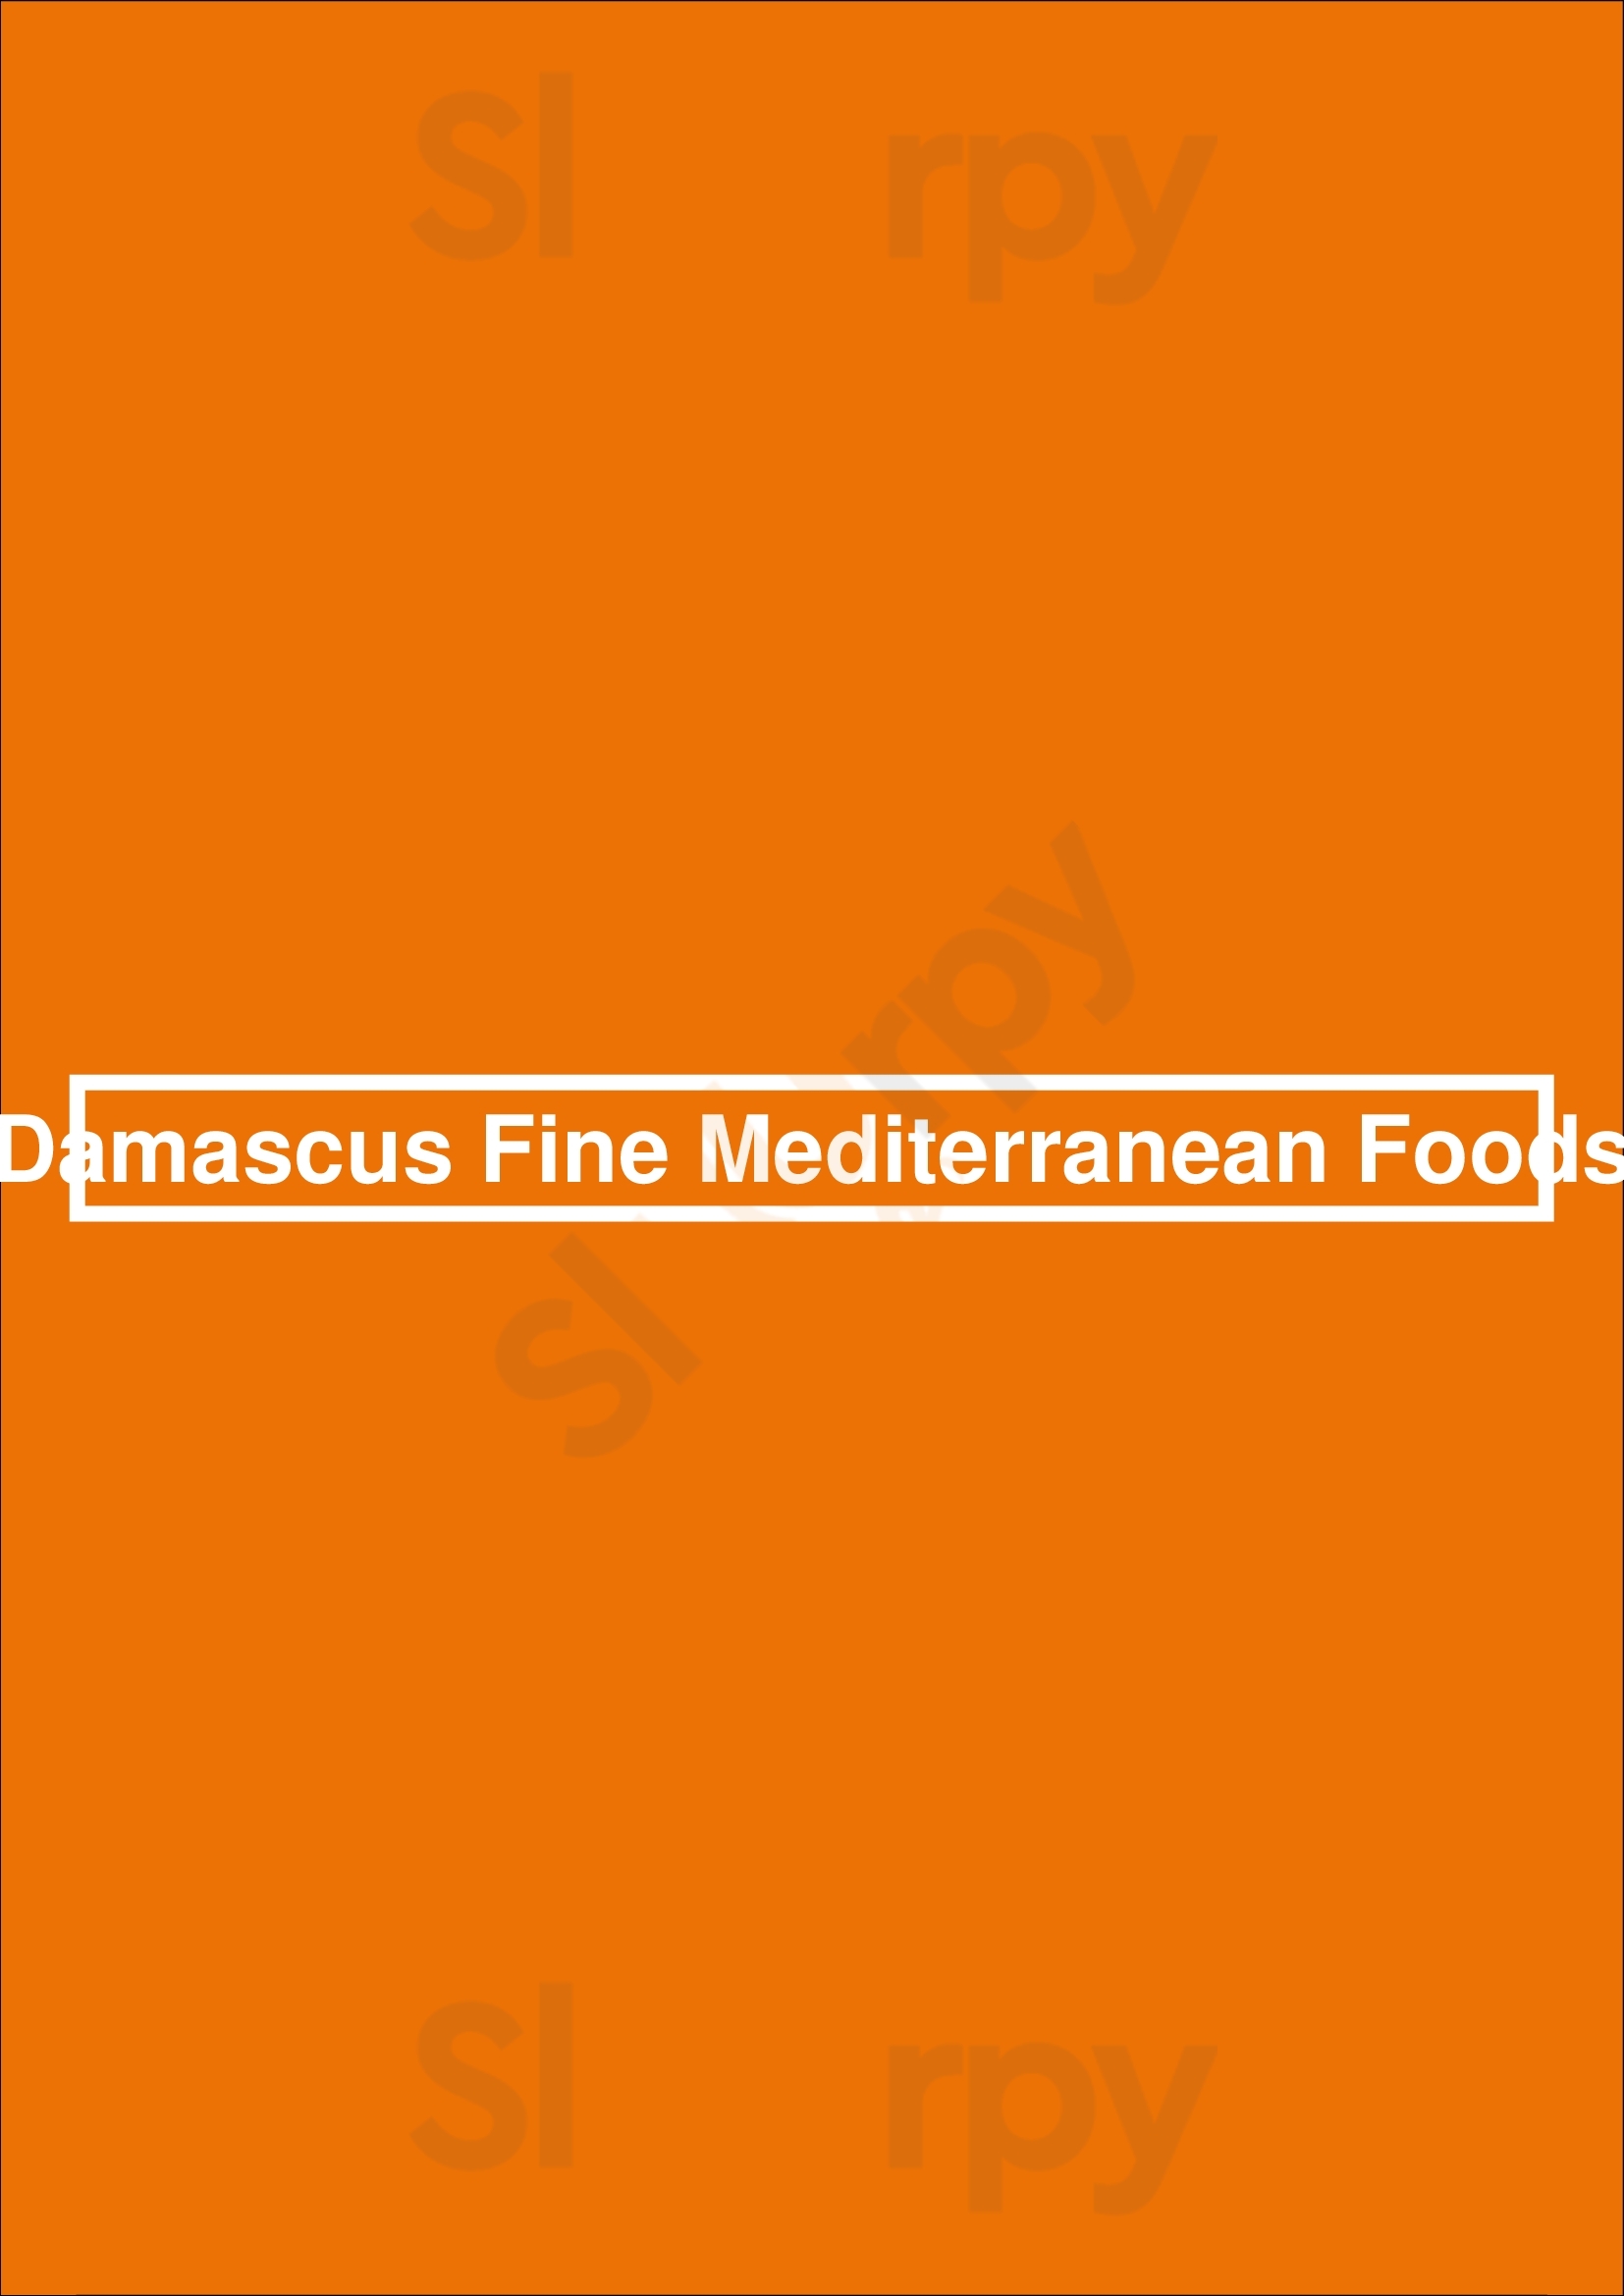 Damascus Fine Mediterranean Foods Calgary Menu - 1